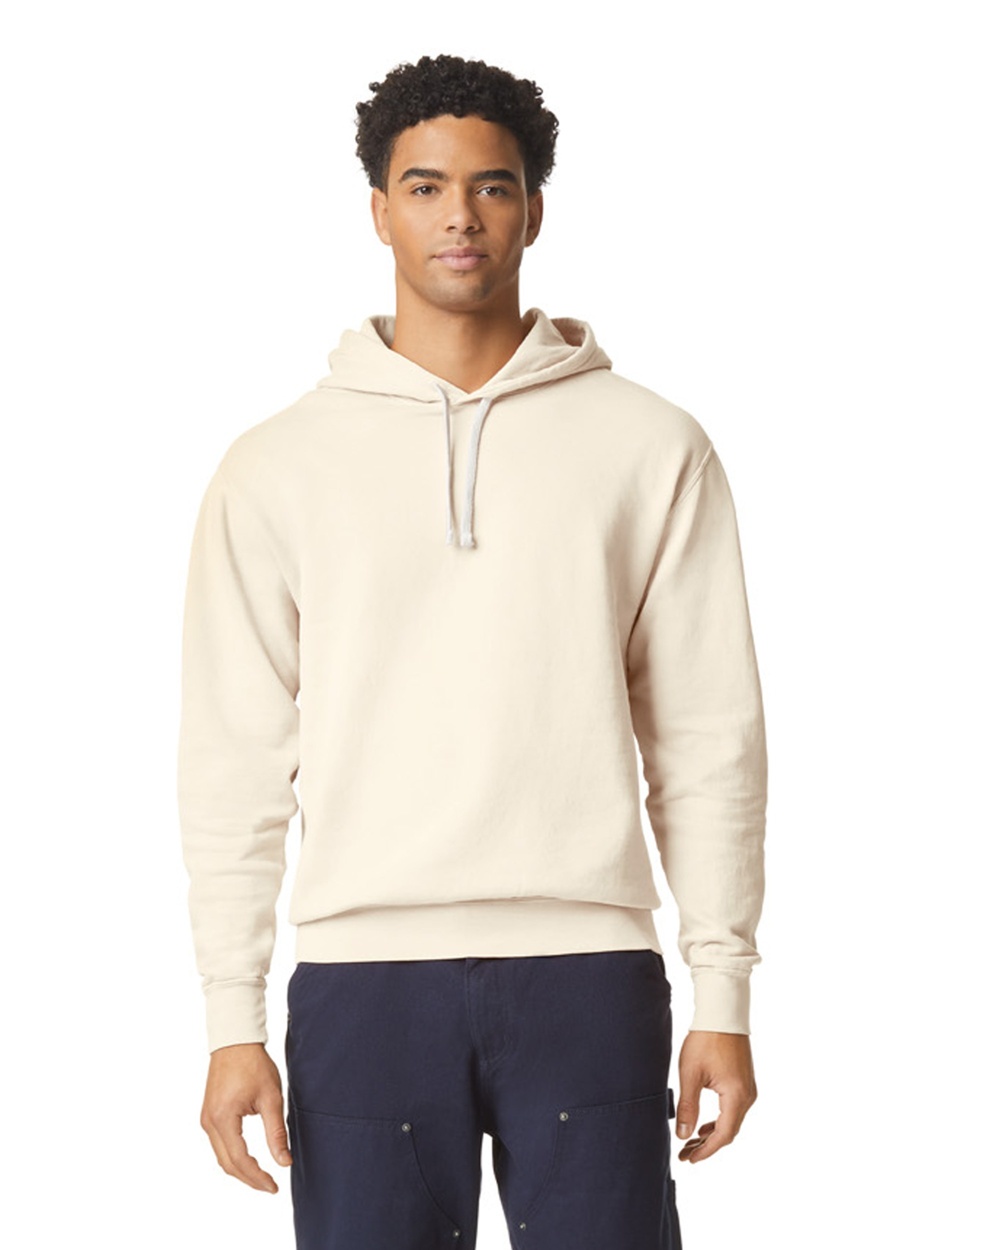 Lightweight Adult Hooded Sweatshirt